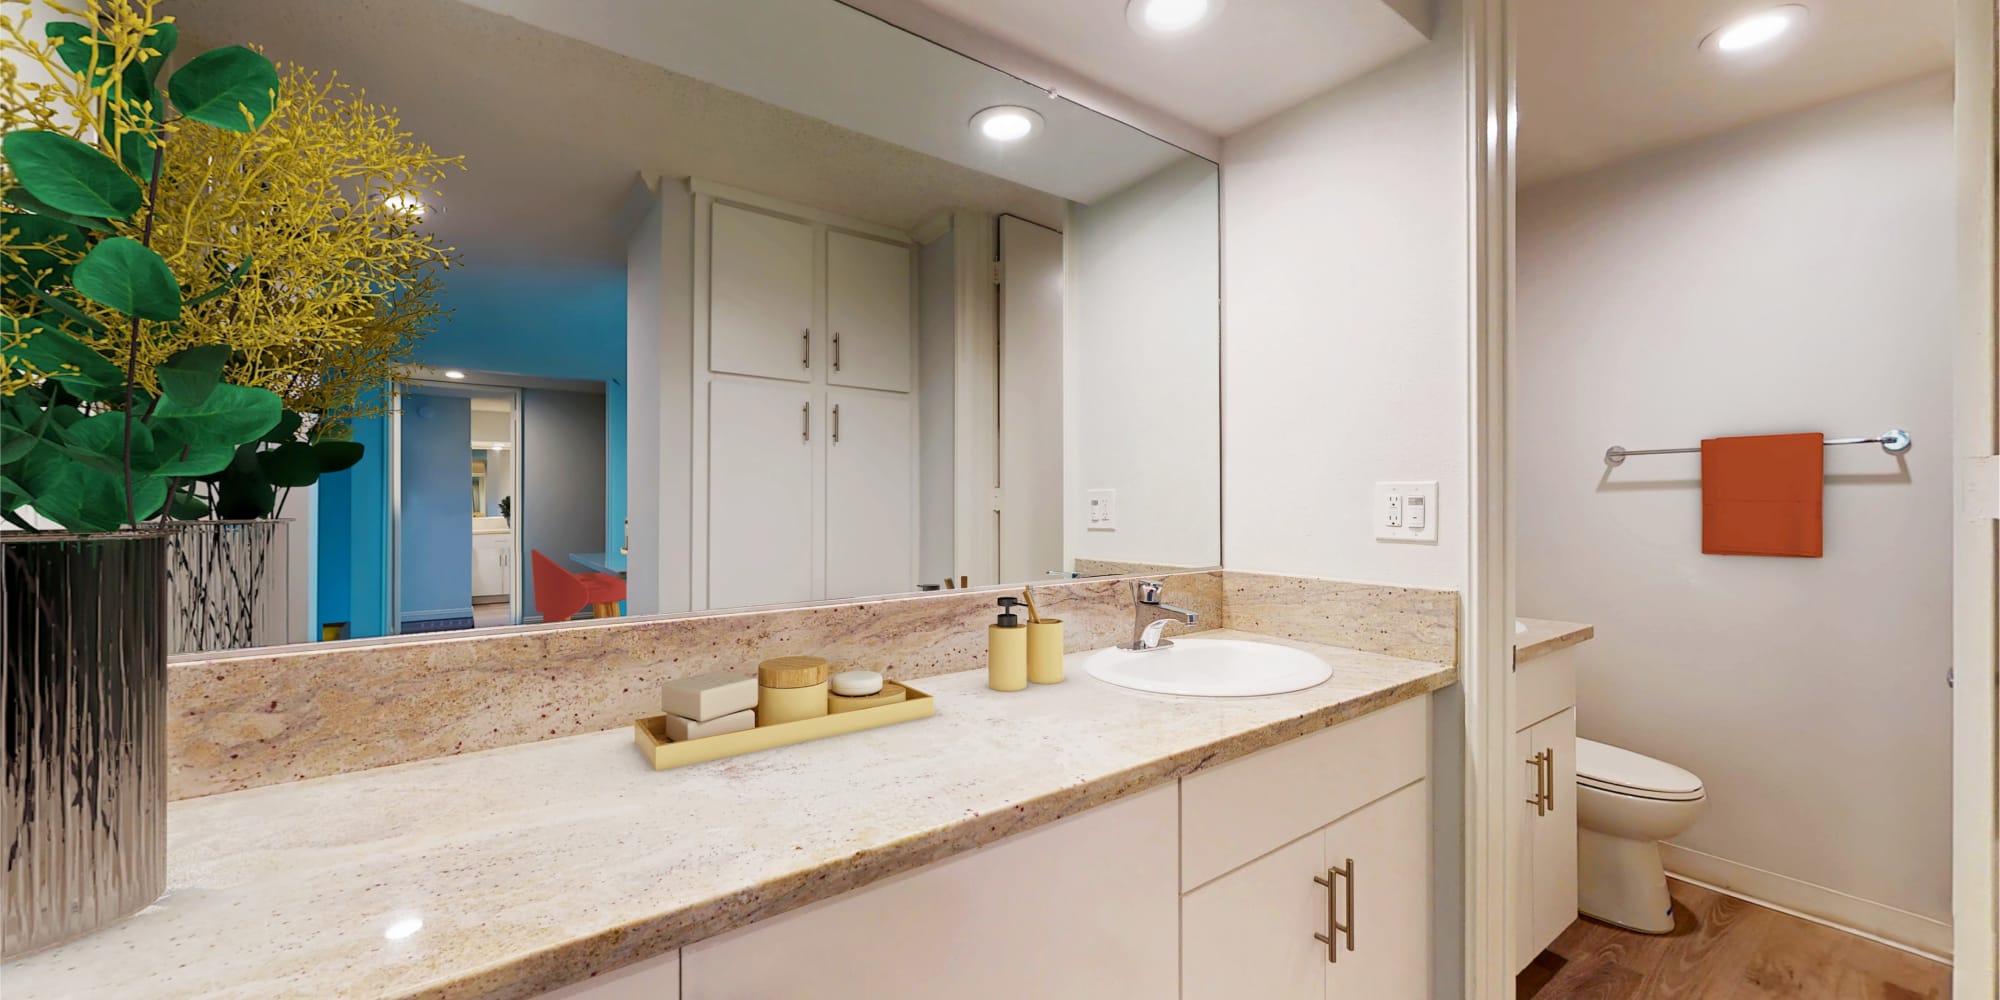 Model home's bathroom with extra storage and a granite countertop at Casa Granada in Los Angeles, California